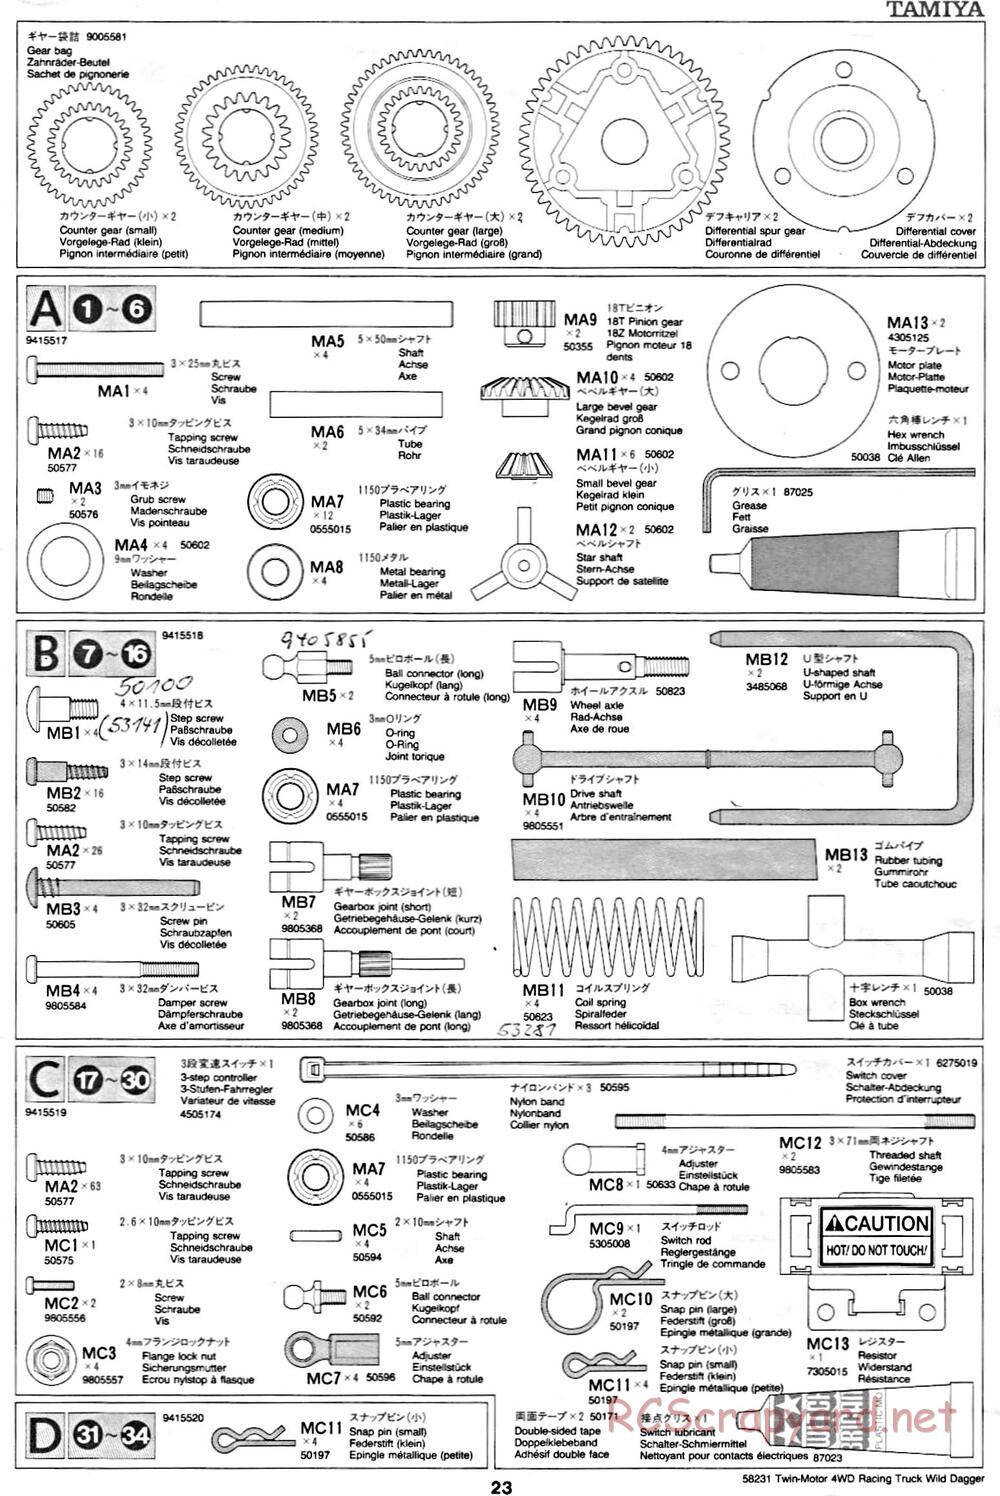 Tamiya - Wild Dagger - WR-01 Chassis - Manual - Page 23